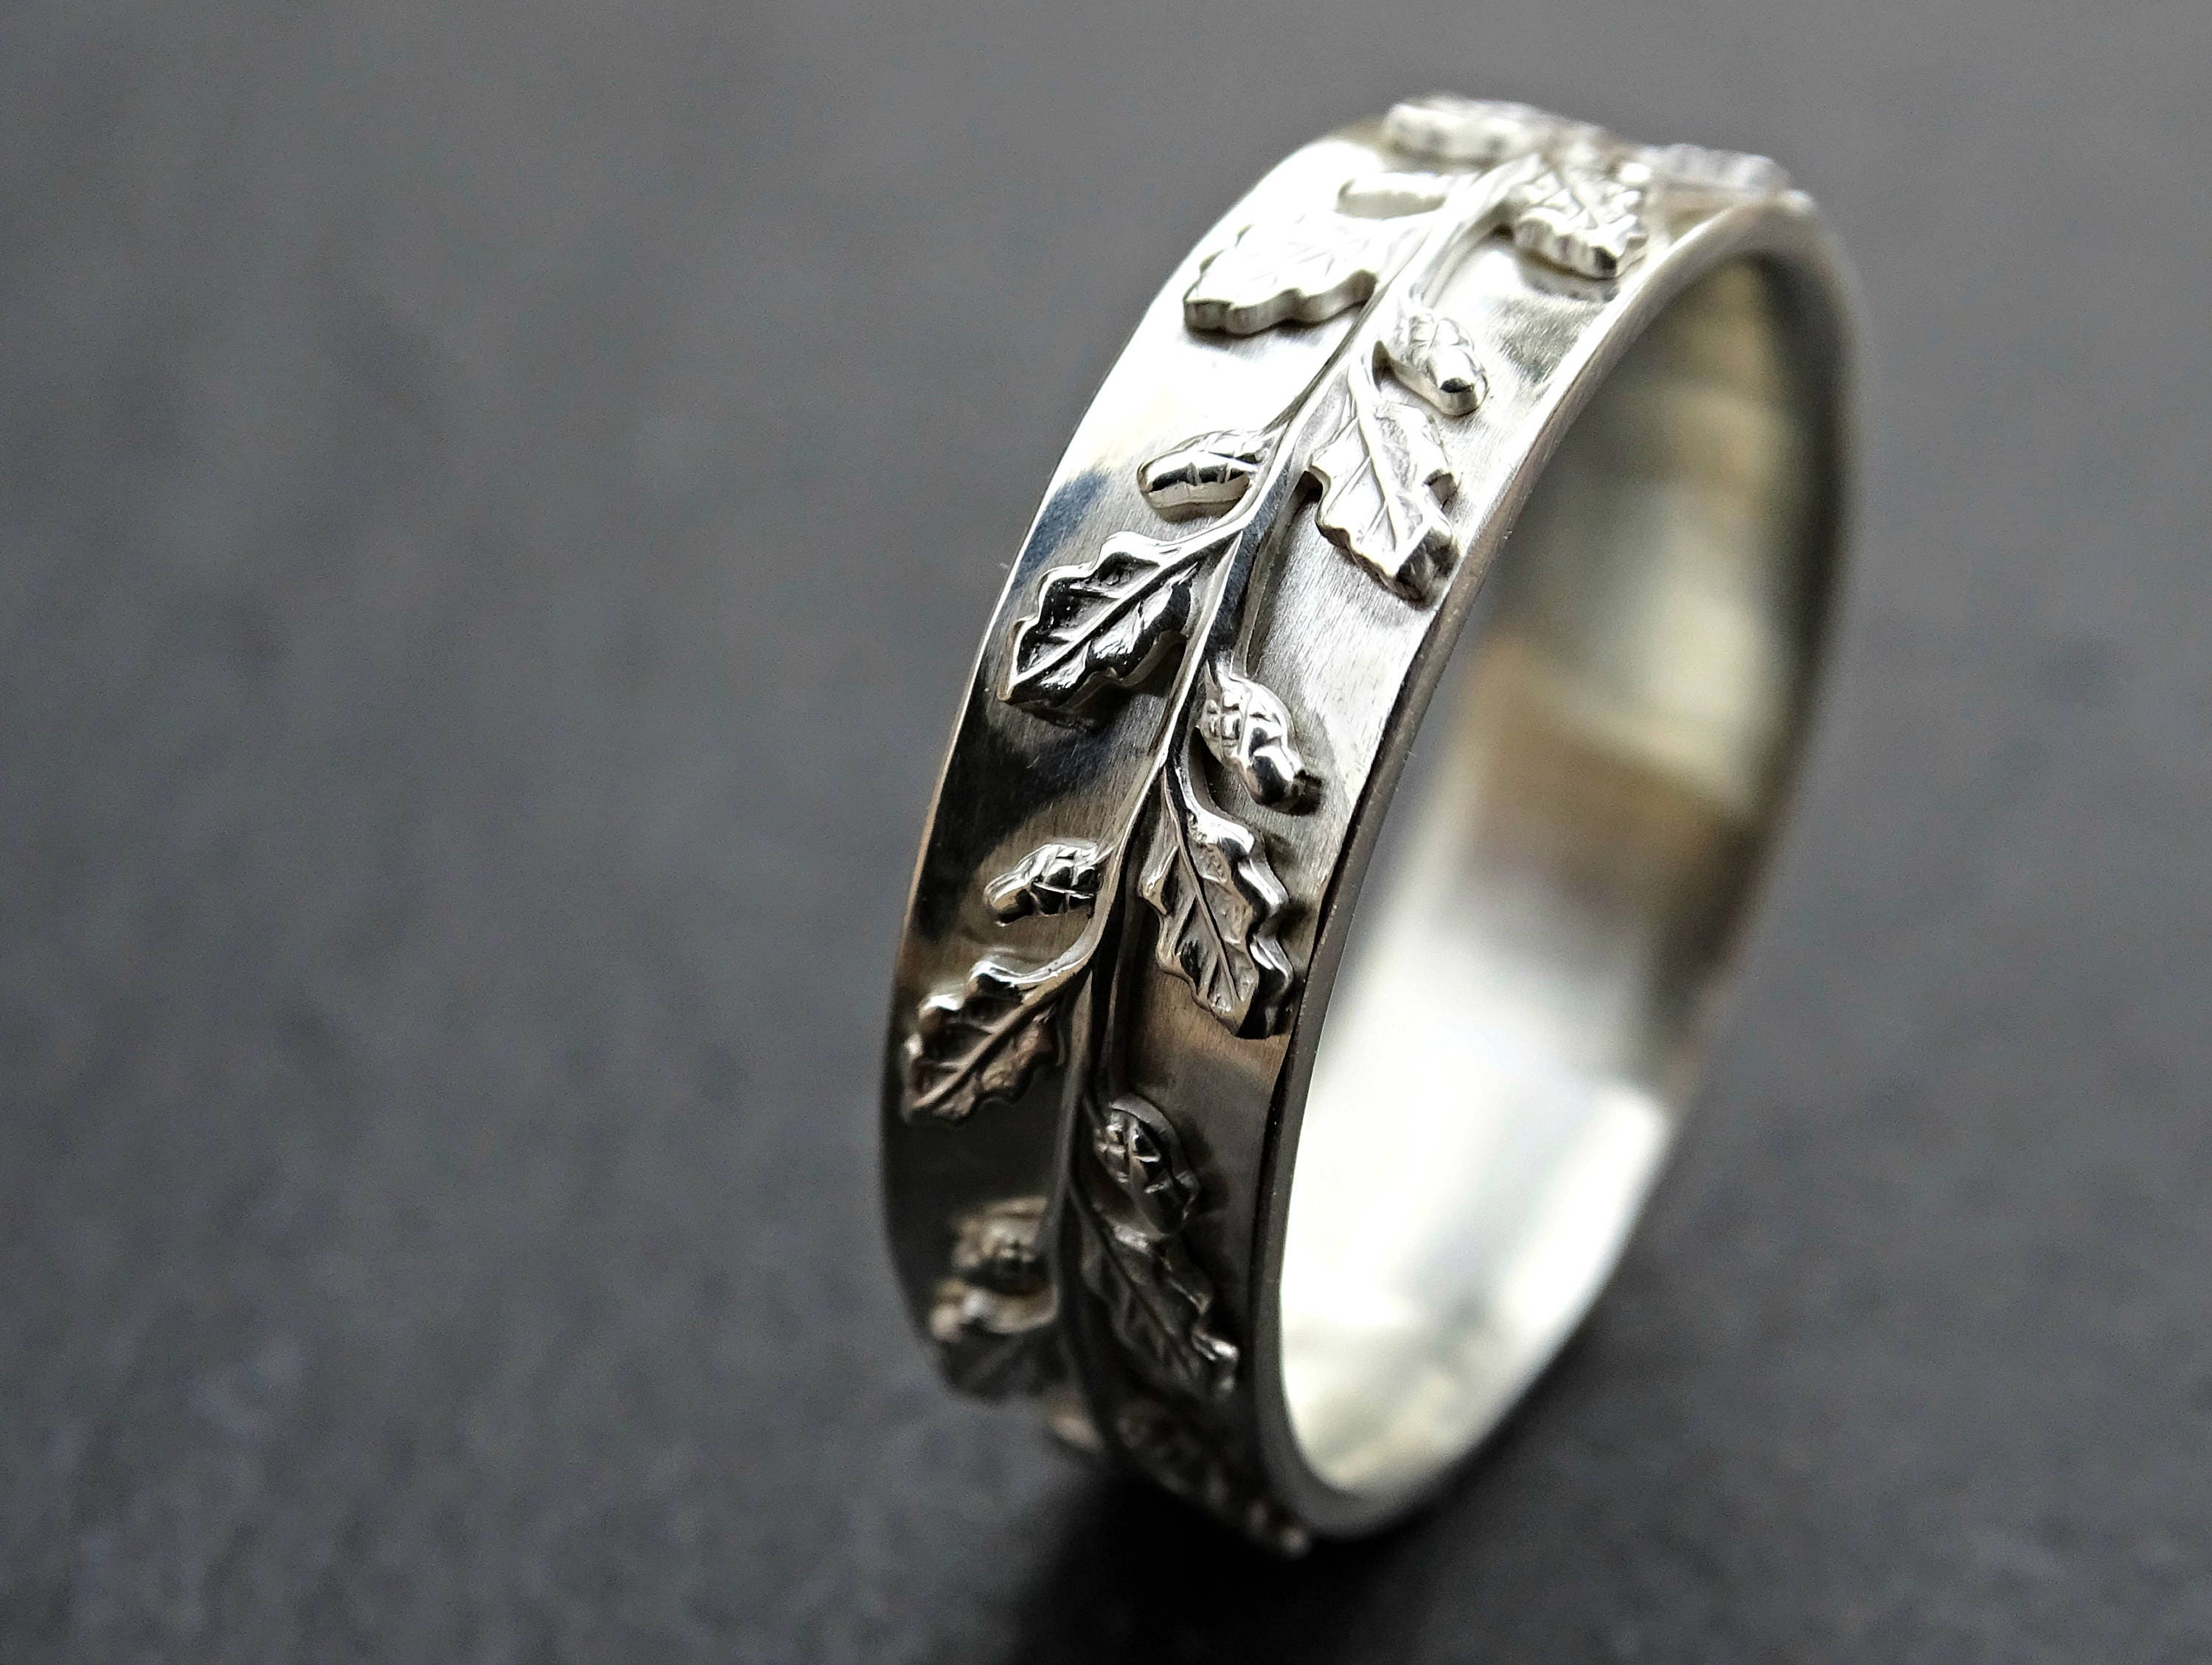  medieval wedding ring silver, fairy tale wedding band